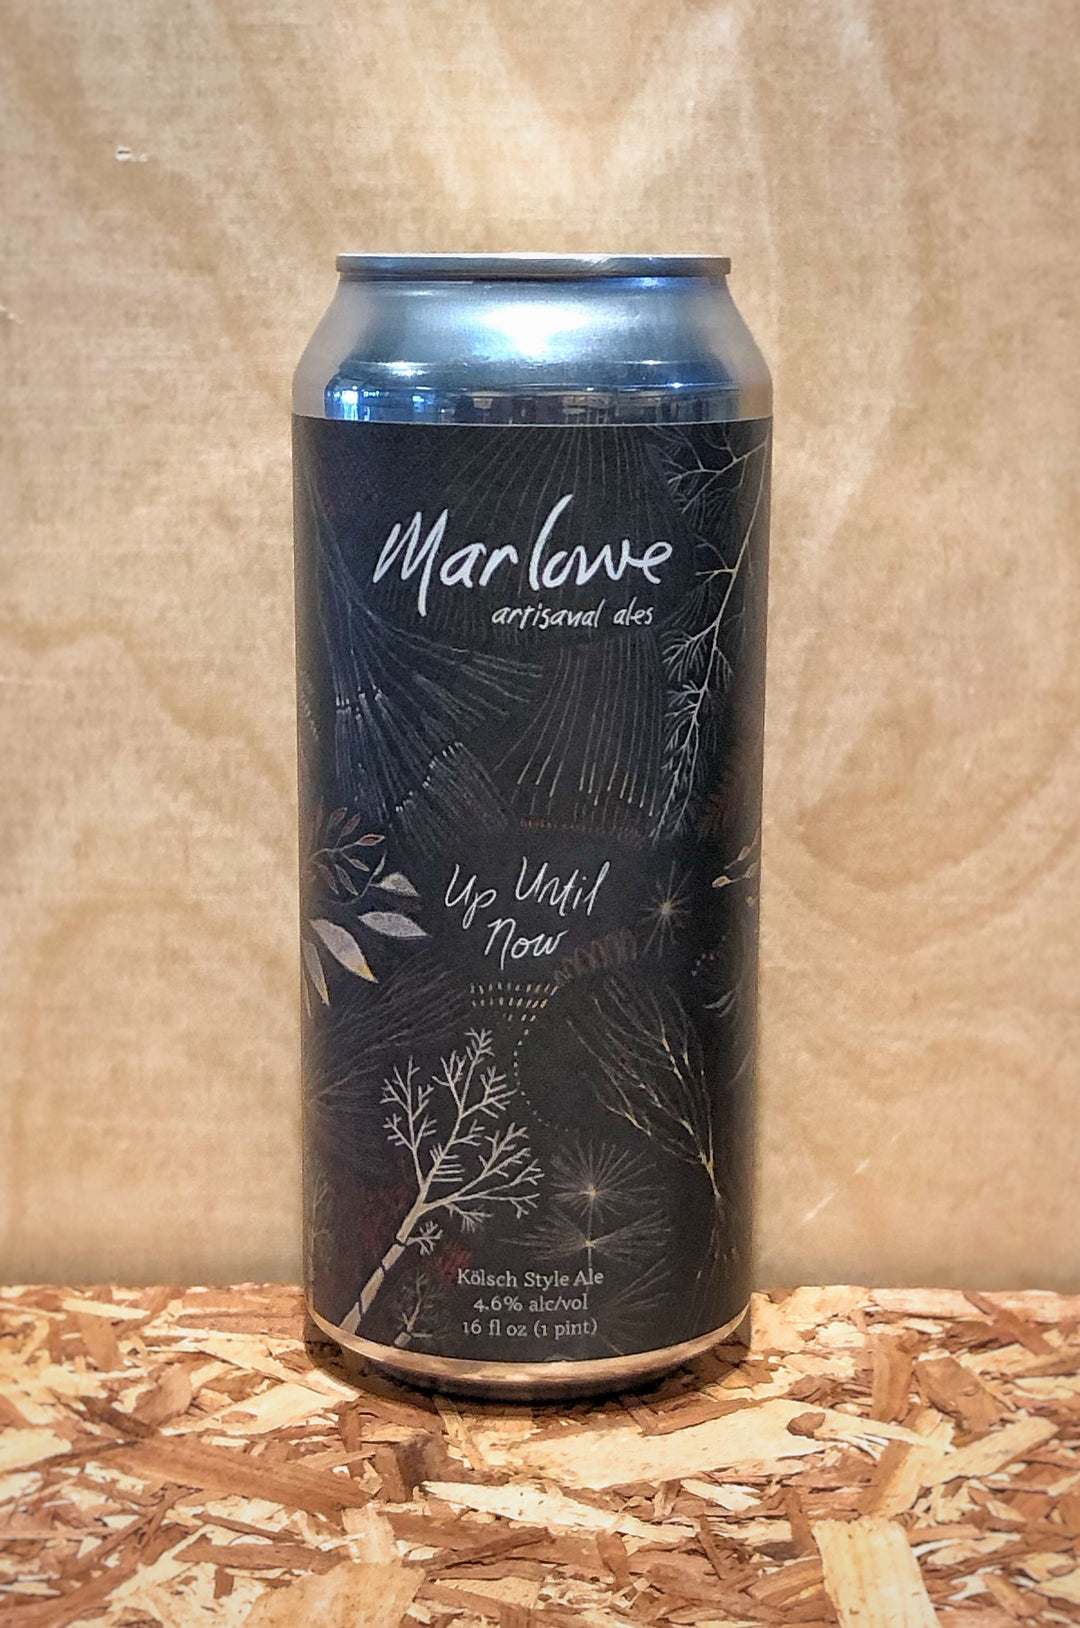 Marlowe Artisanal Ales 'Up Until Now' Kölsch Style Ale (North Haven, CT)